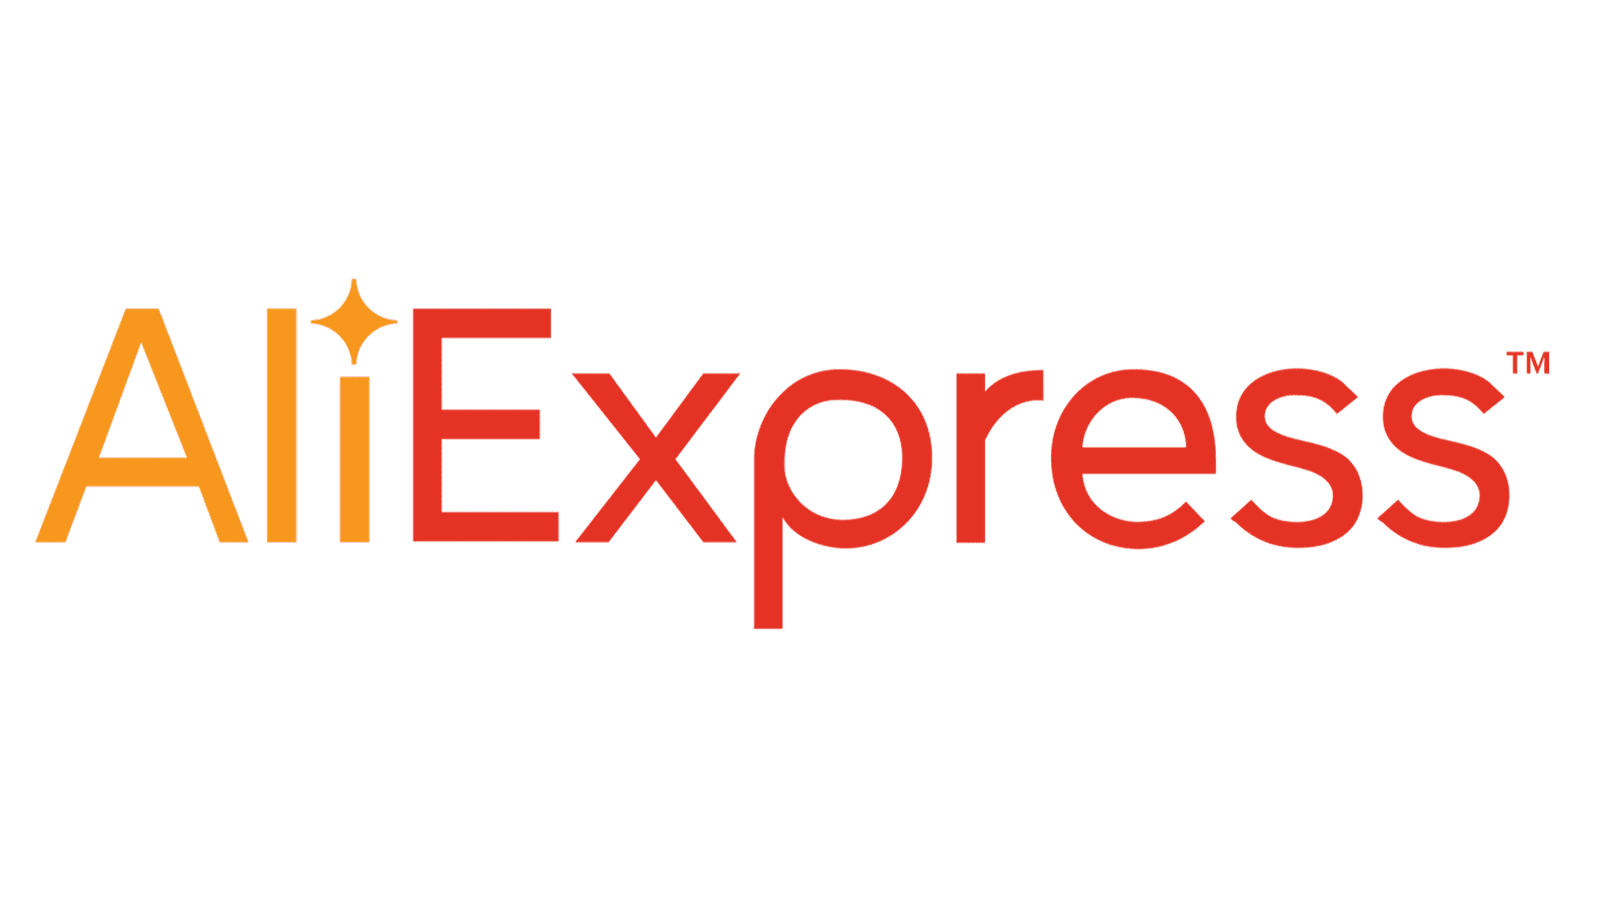 Aliexpress-Logo